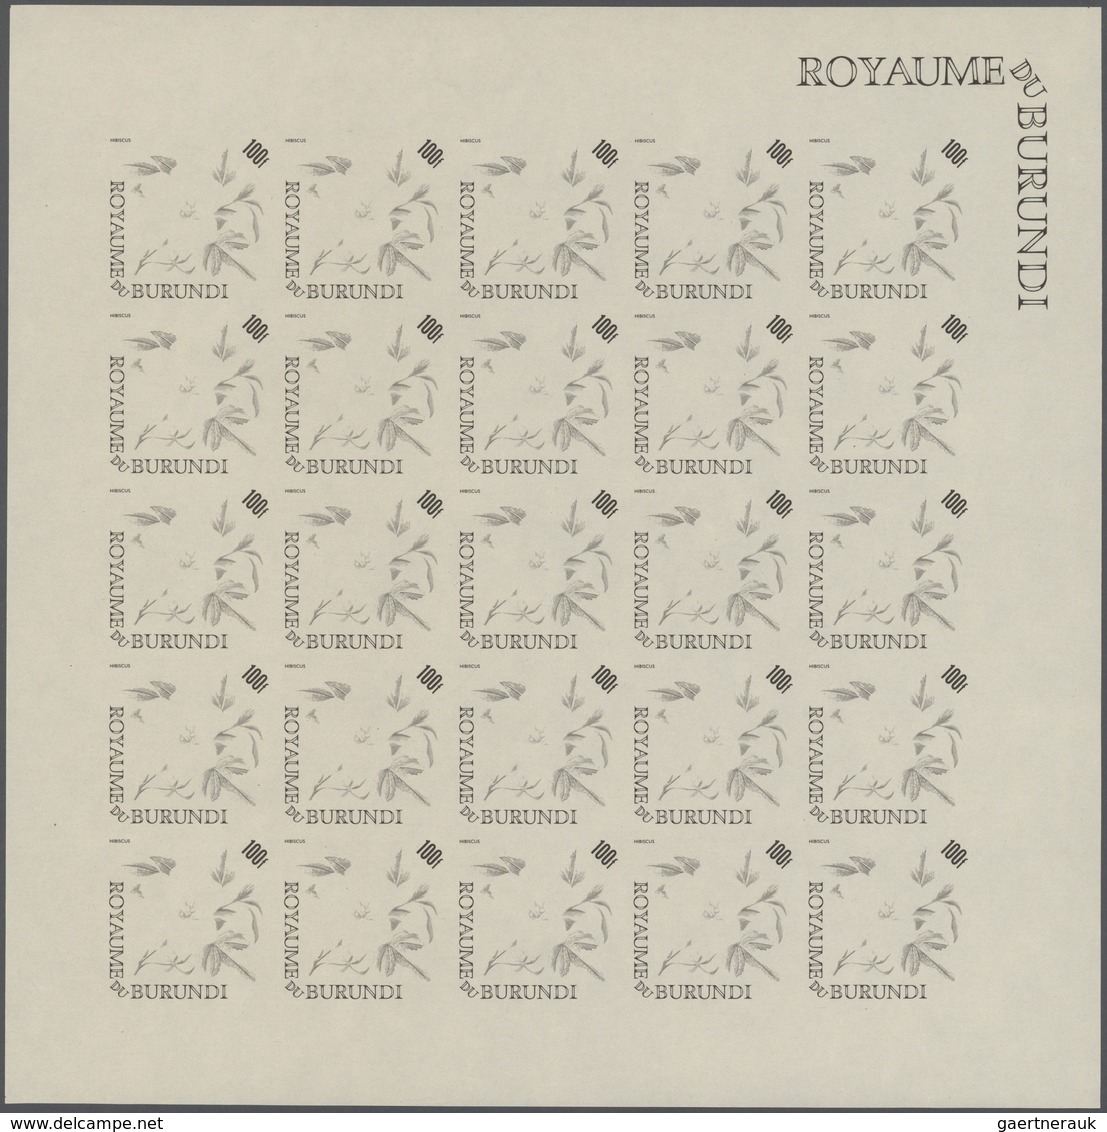 25063 Thematik: Flora, Botanik / flora, botany, bloom: 1966, Burundi. Progressive proofs set of sheets for